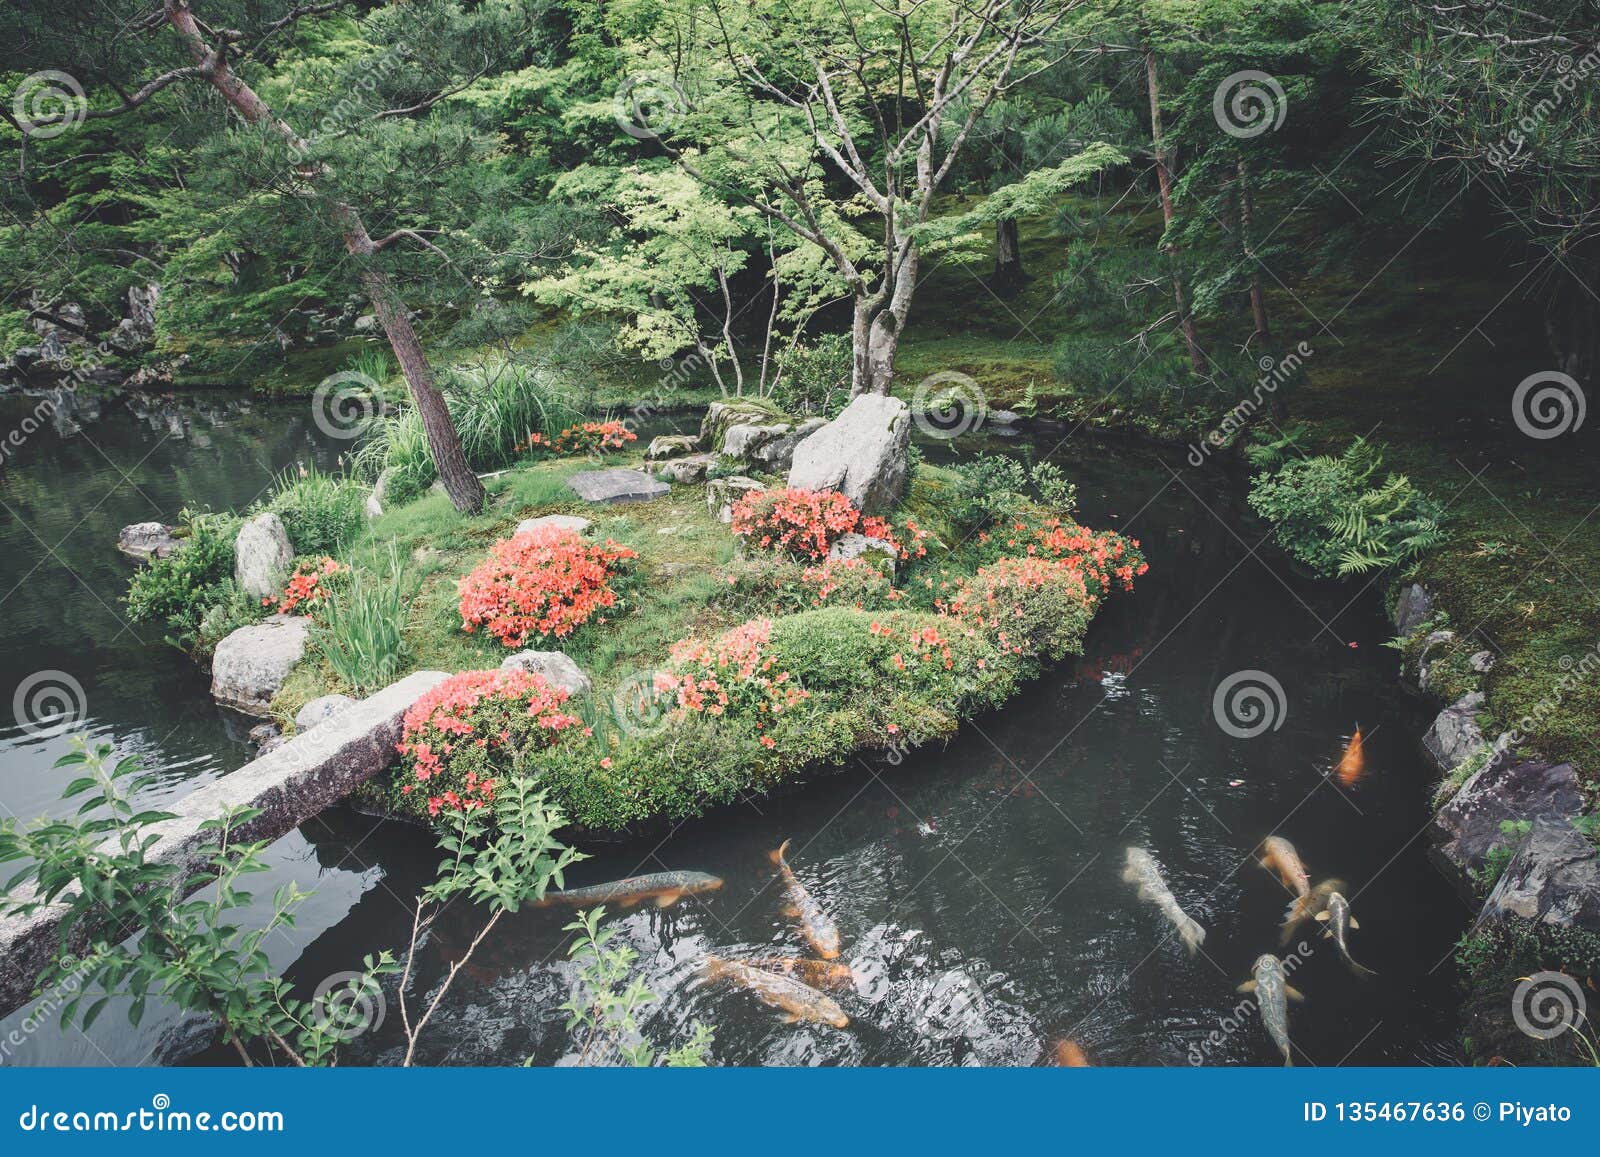 Japanese Zen Stone Garden And Lake Koi Fish With Green Maple